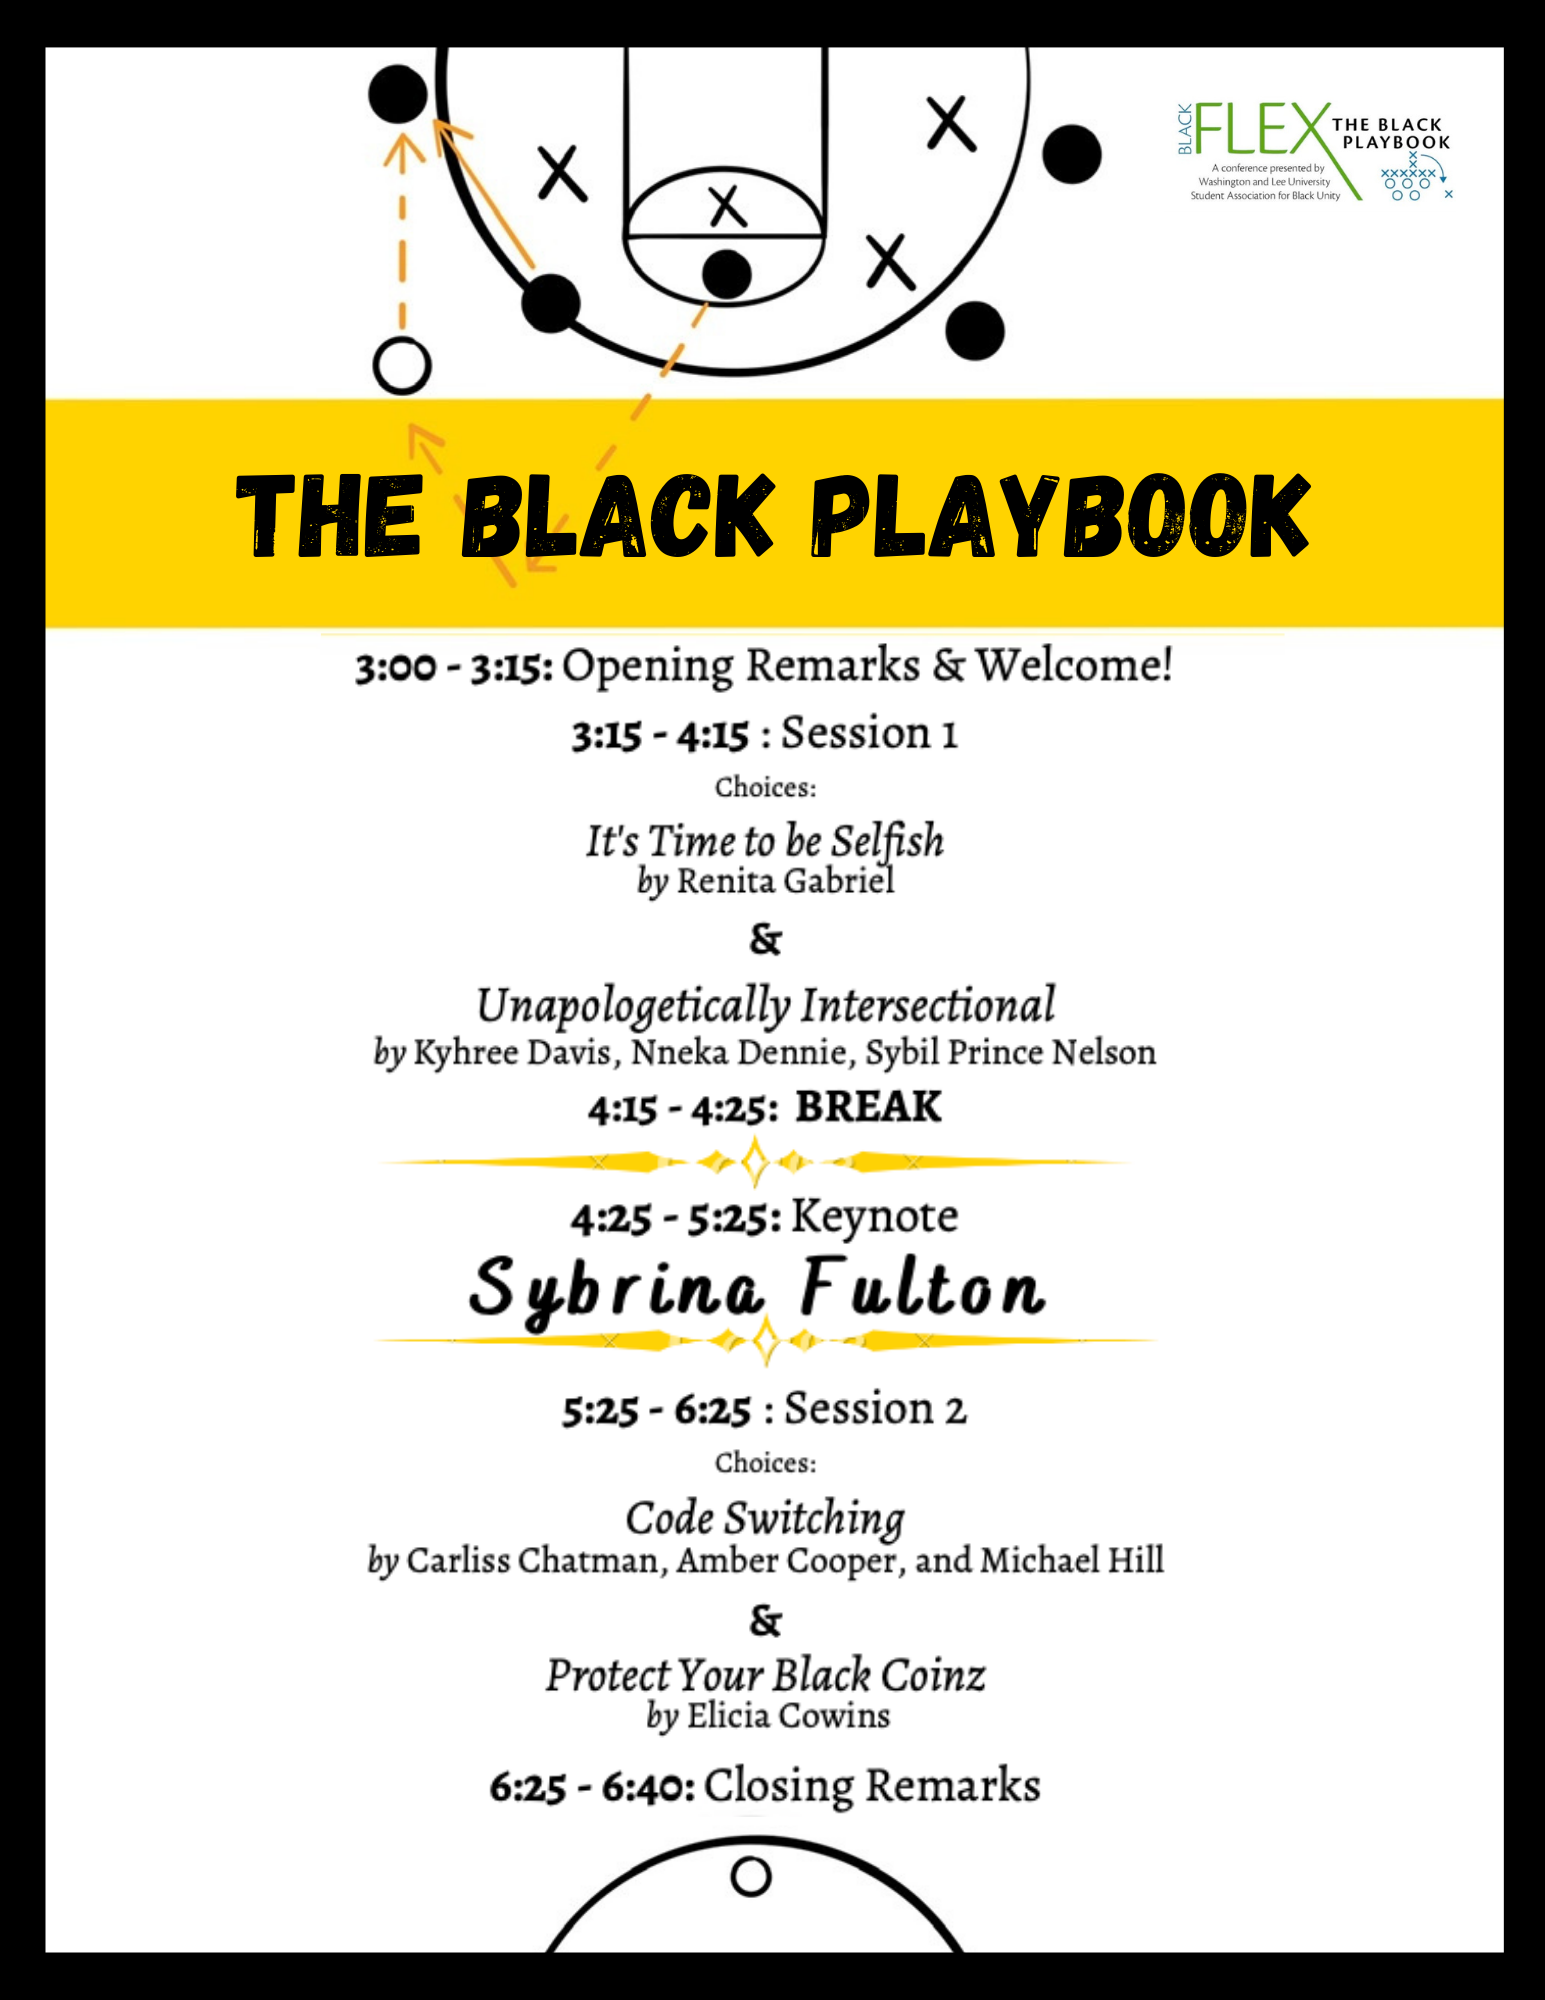 The Black Playbook